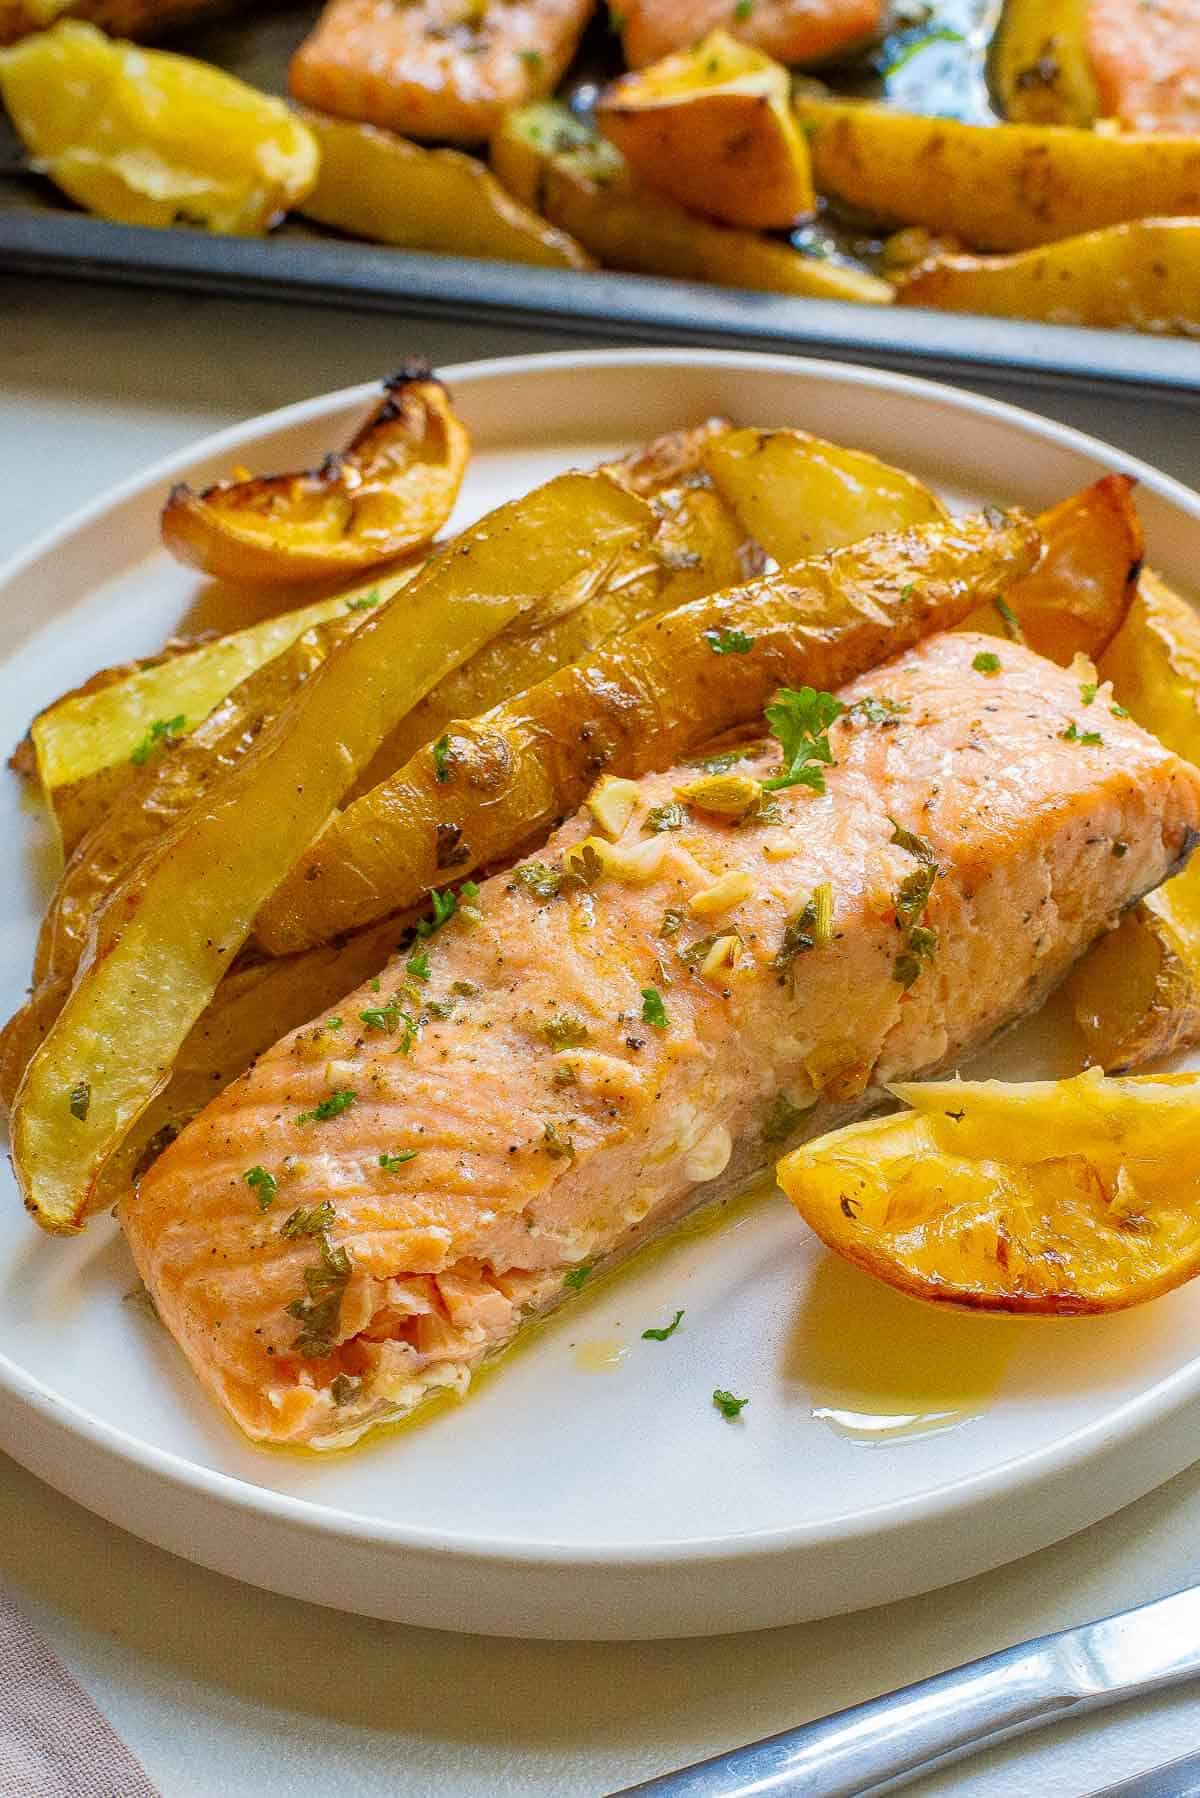 a plate of baked potato and garlic lemon salmon